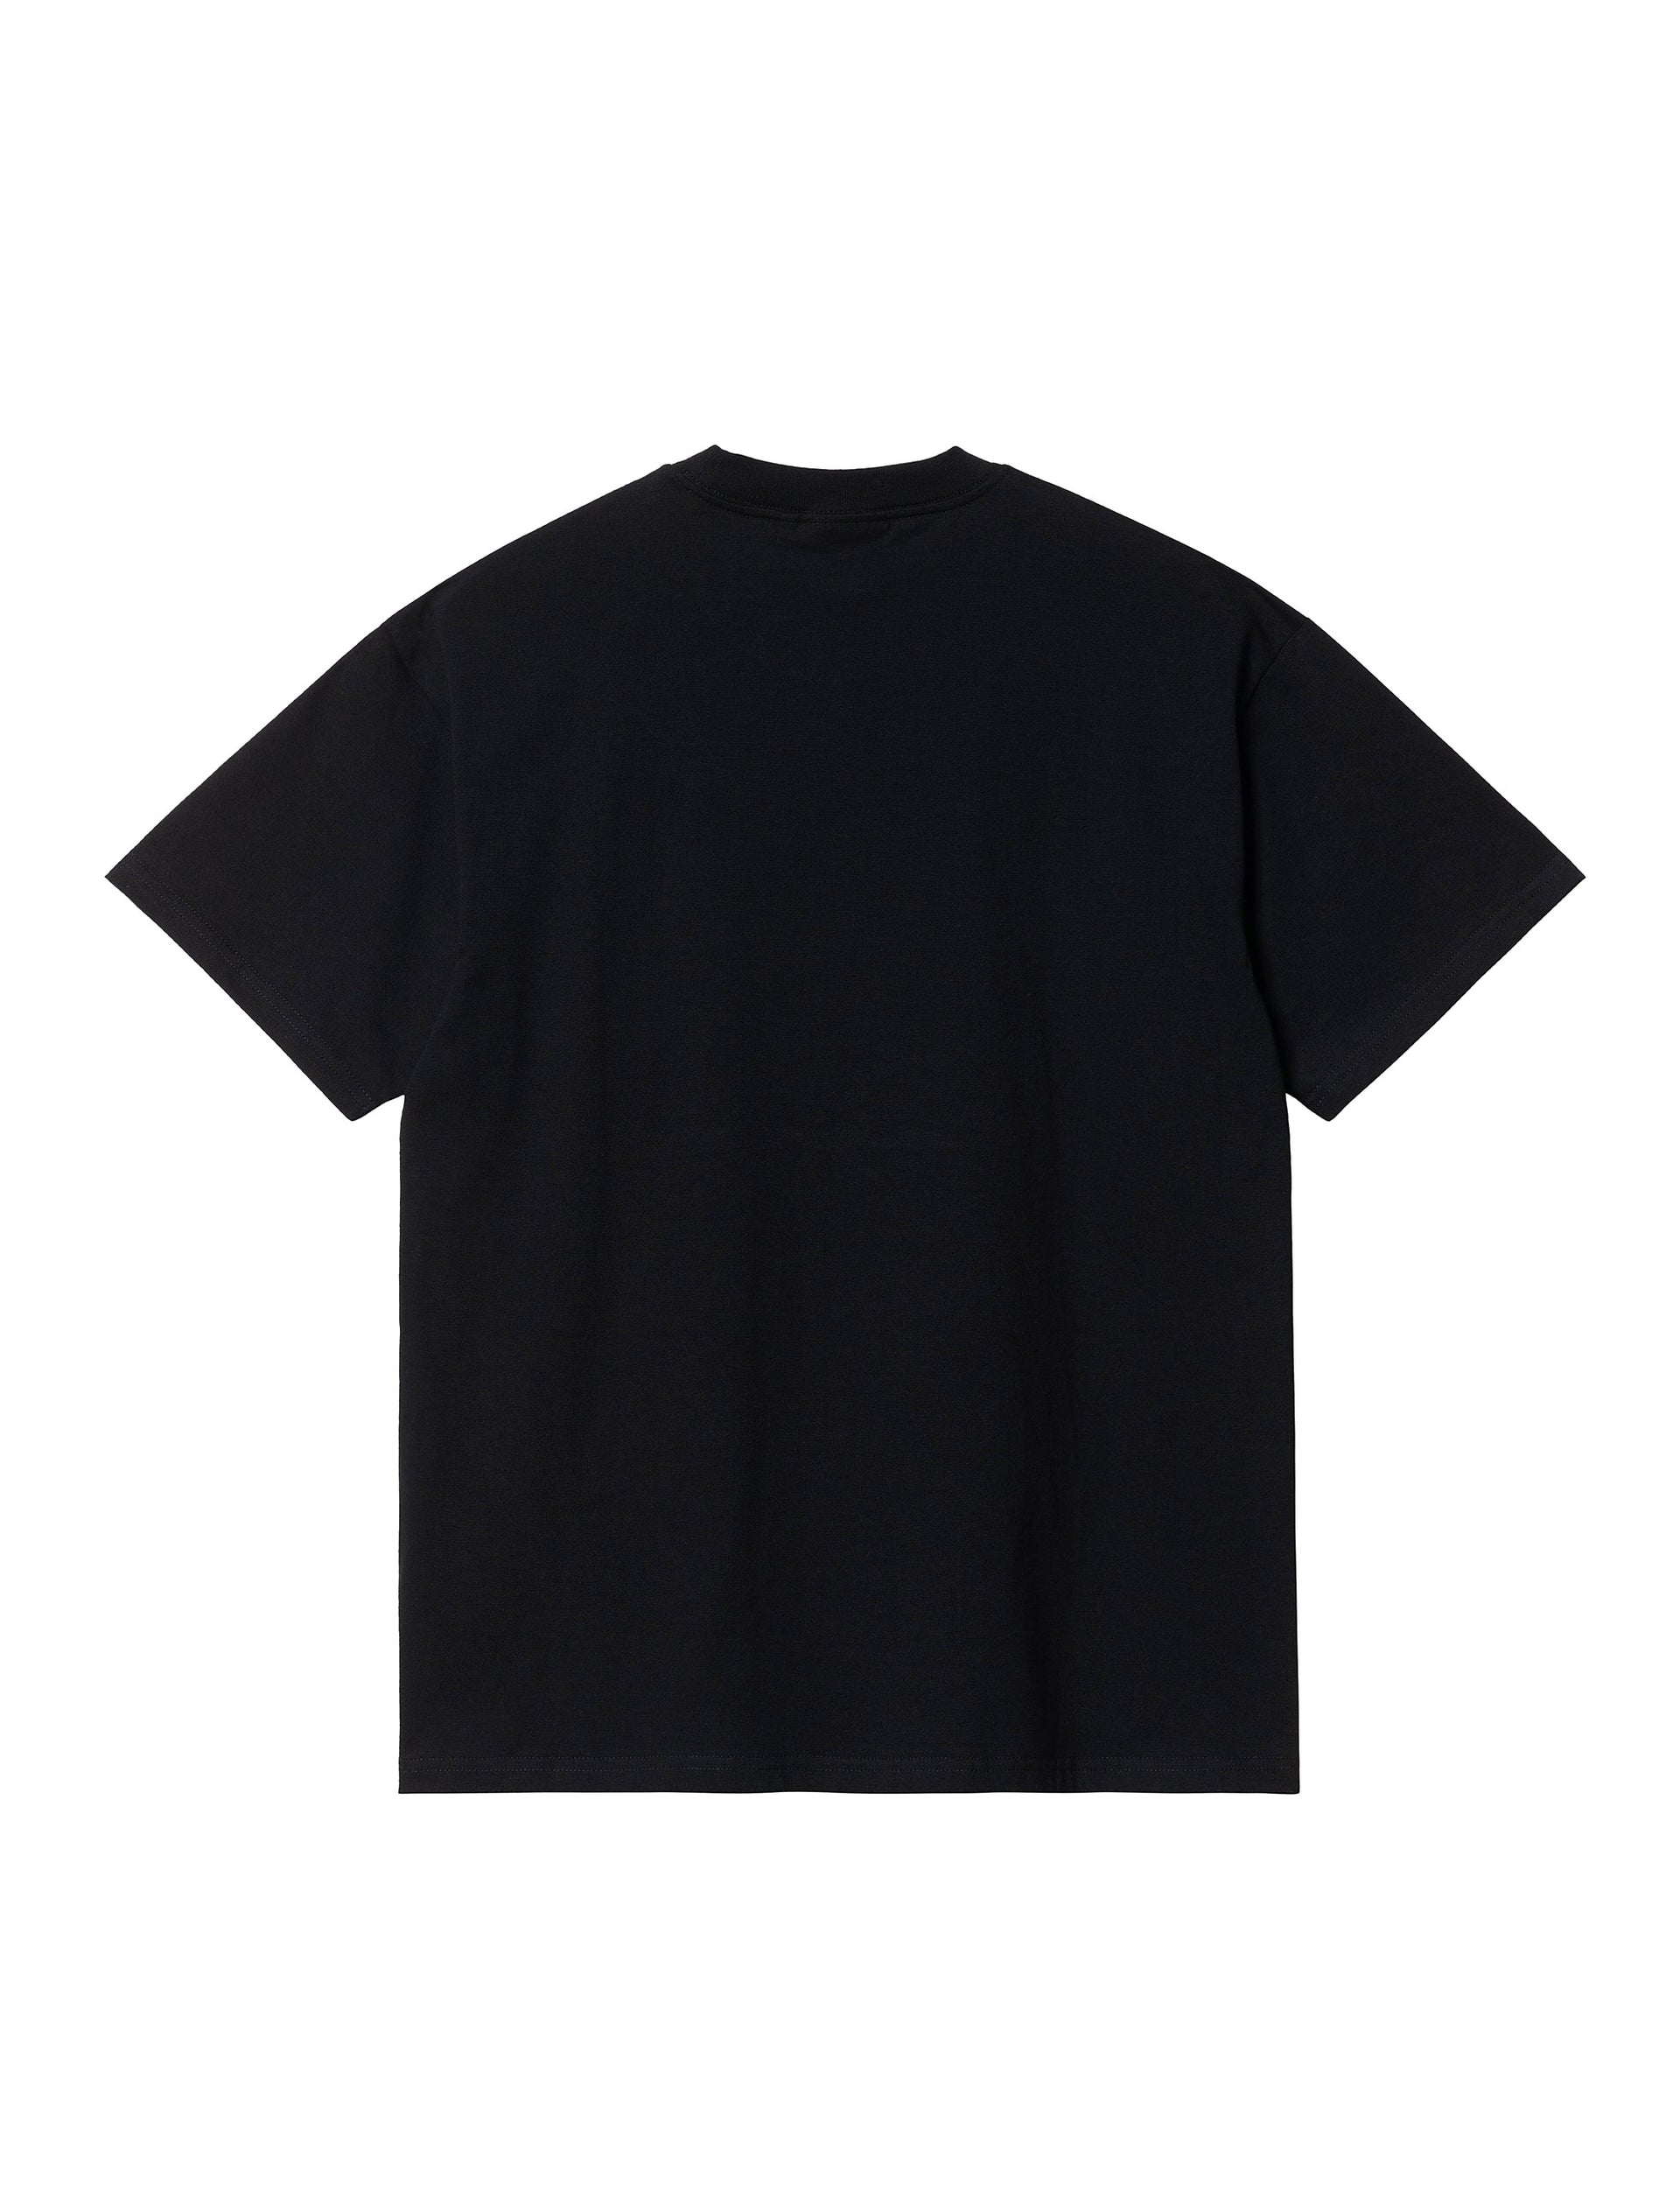 CARHARTT WIP Quartersnacks S/S Graphic T-Shirt BLACK